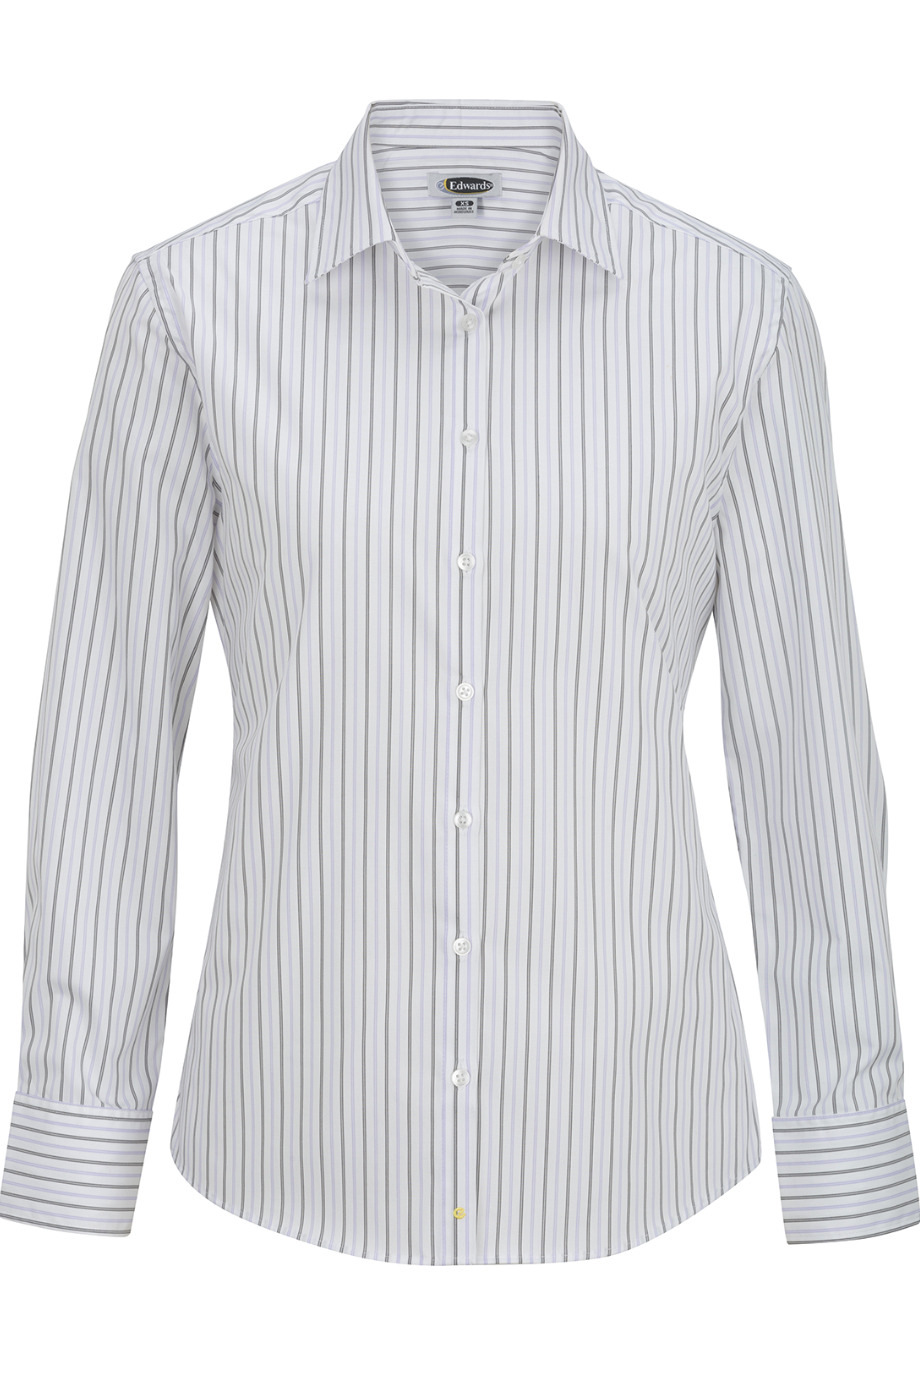 Edwards Garment 5983 - Ladies' Double Stripe Poplin